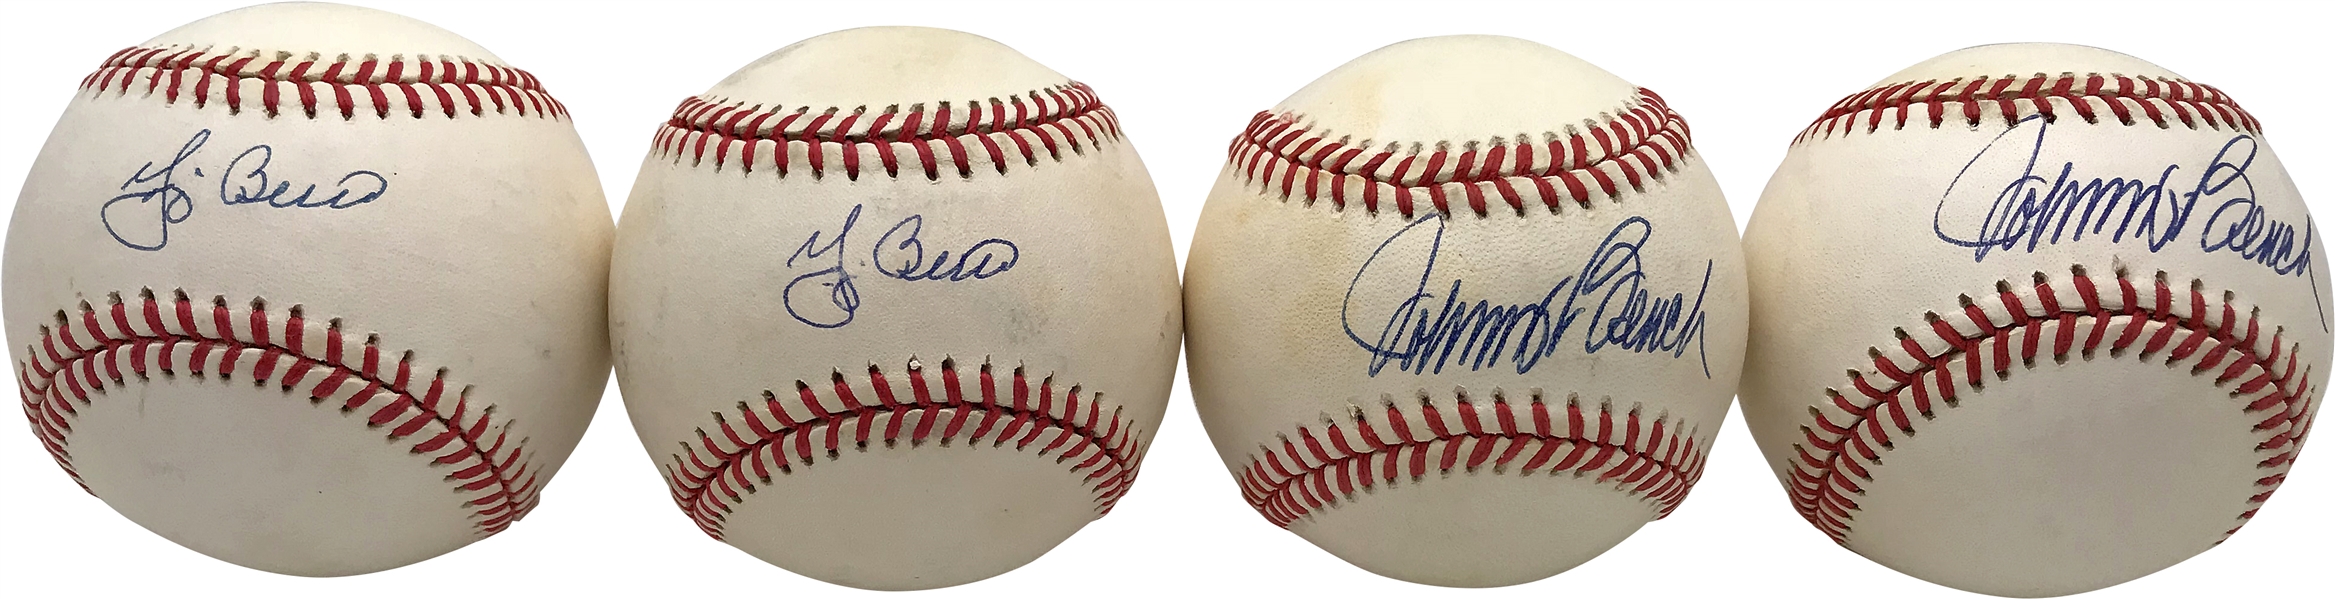 MLB Catcher Legends Lot of Four (4) Signed Baseballs w/ Bench & Berra! (Beckett/BAS Guaranteed)